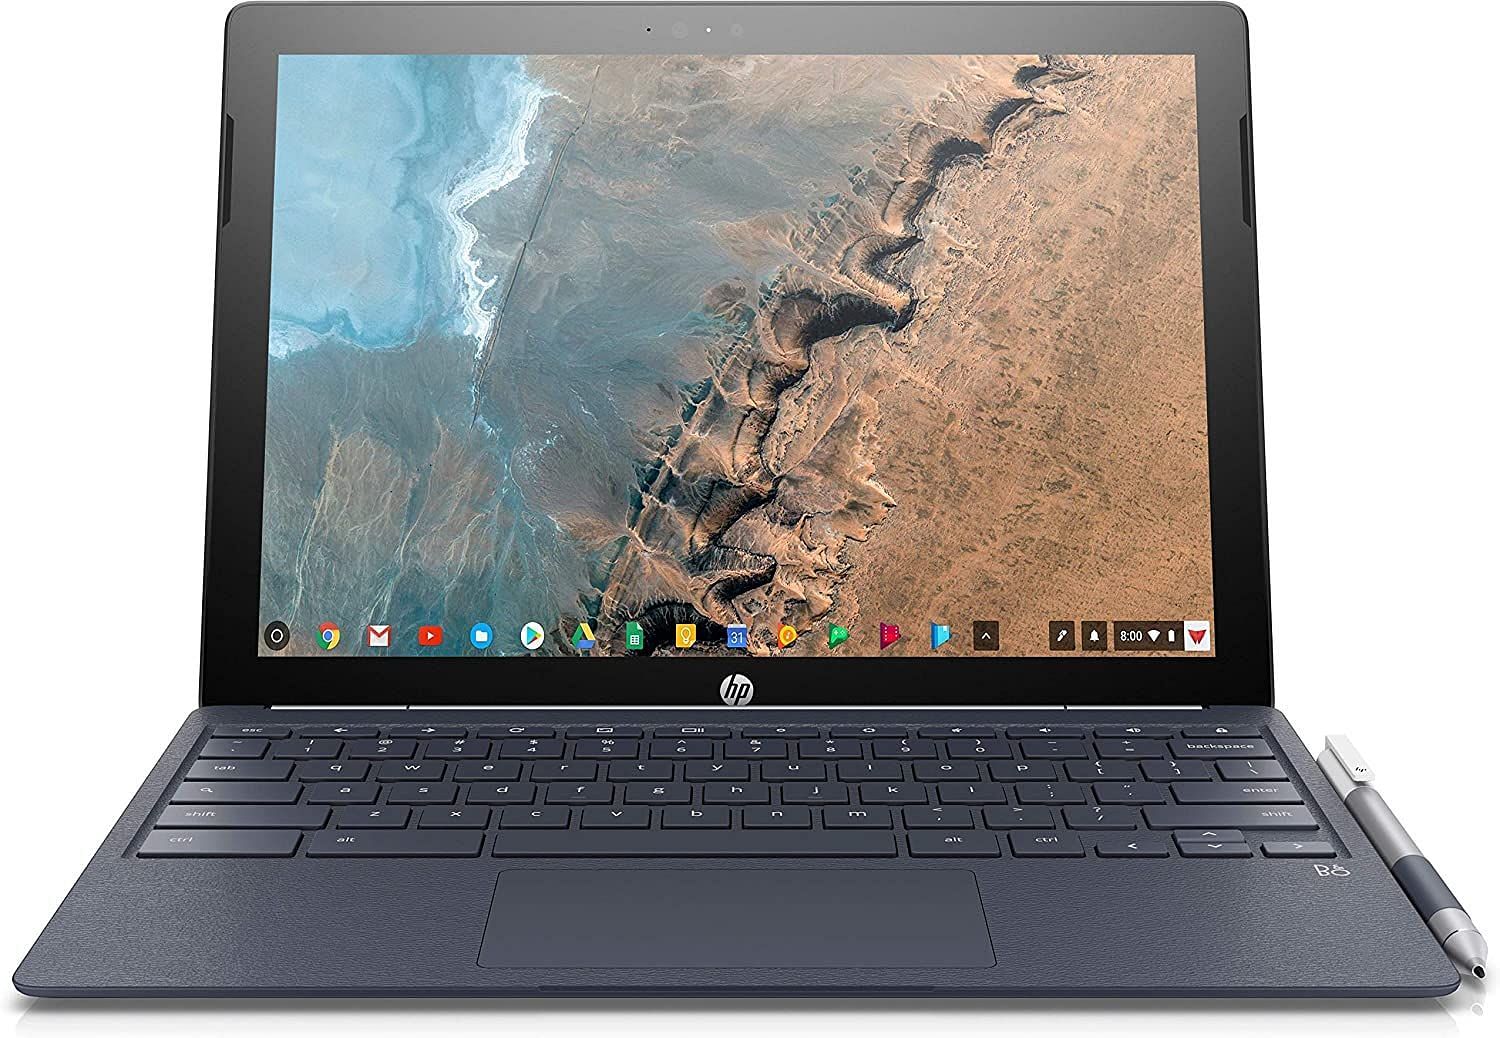 Students will enjoy the HP Chromebook X2 (Image via Amazon)